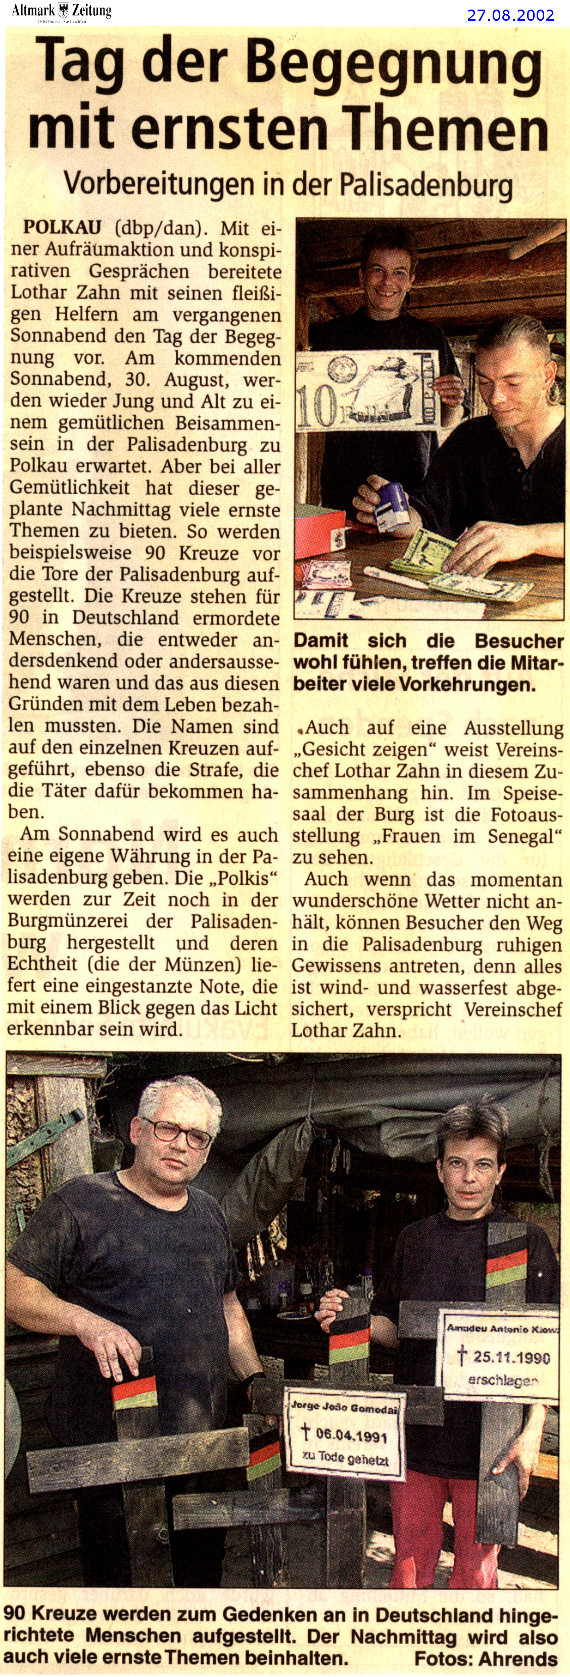 27.08.2002 az tag d begegnung1 Die Schmiede e.V.